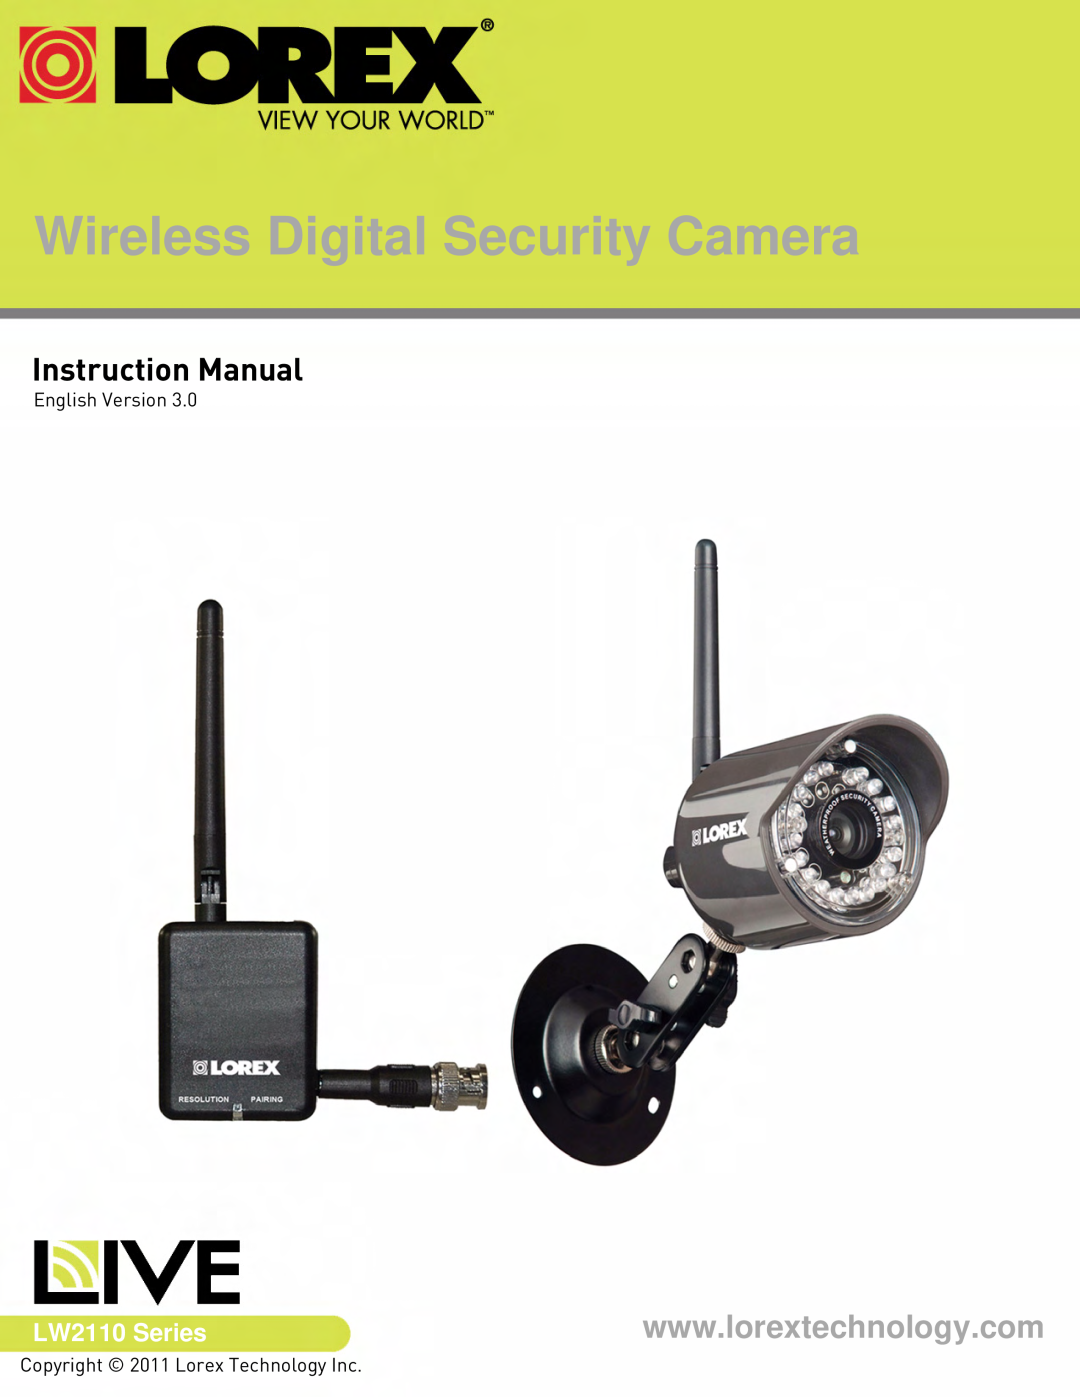 LOREX Technology instruction manual Instruction Manual, Wireless Digital Security Camera, LW2110 Series 